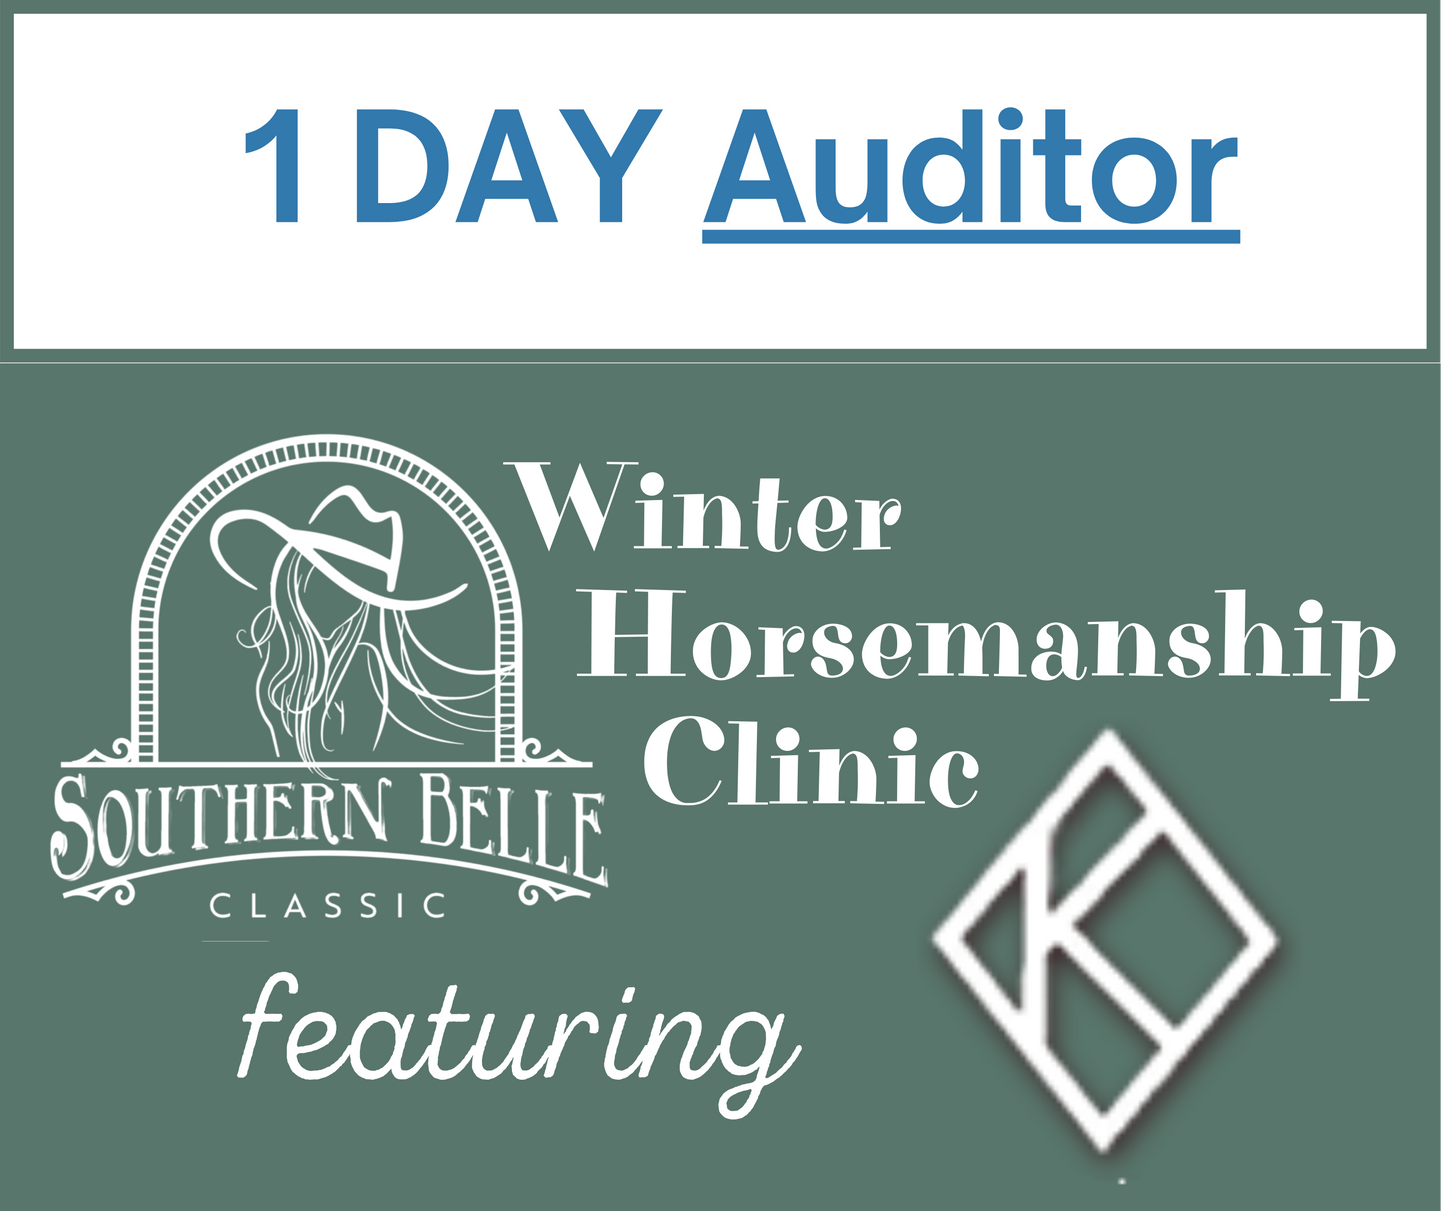 Winter Horsemanship clinic with Diamond K 1 Day Auditor